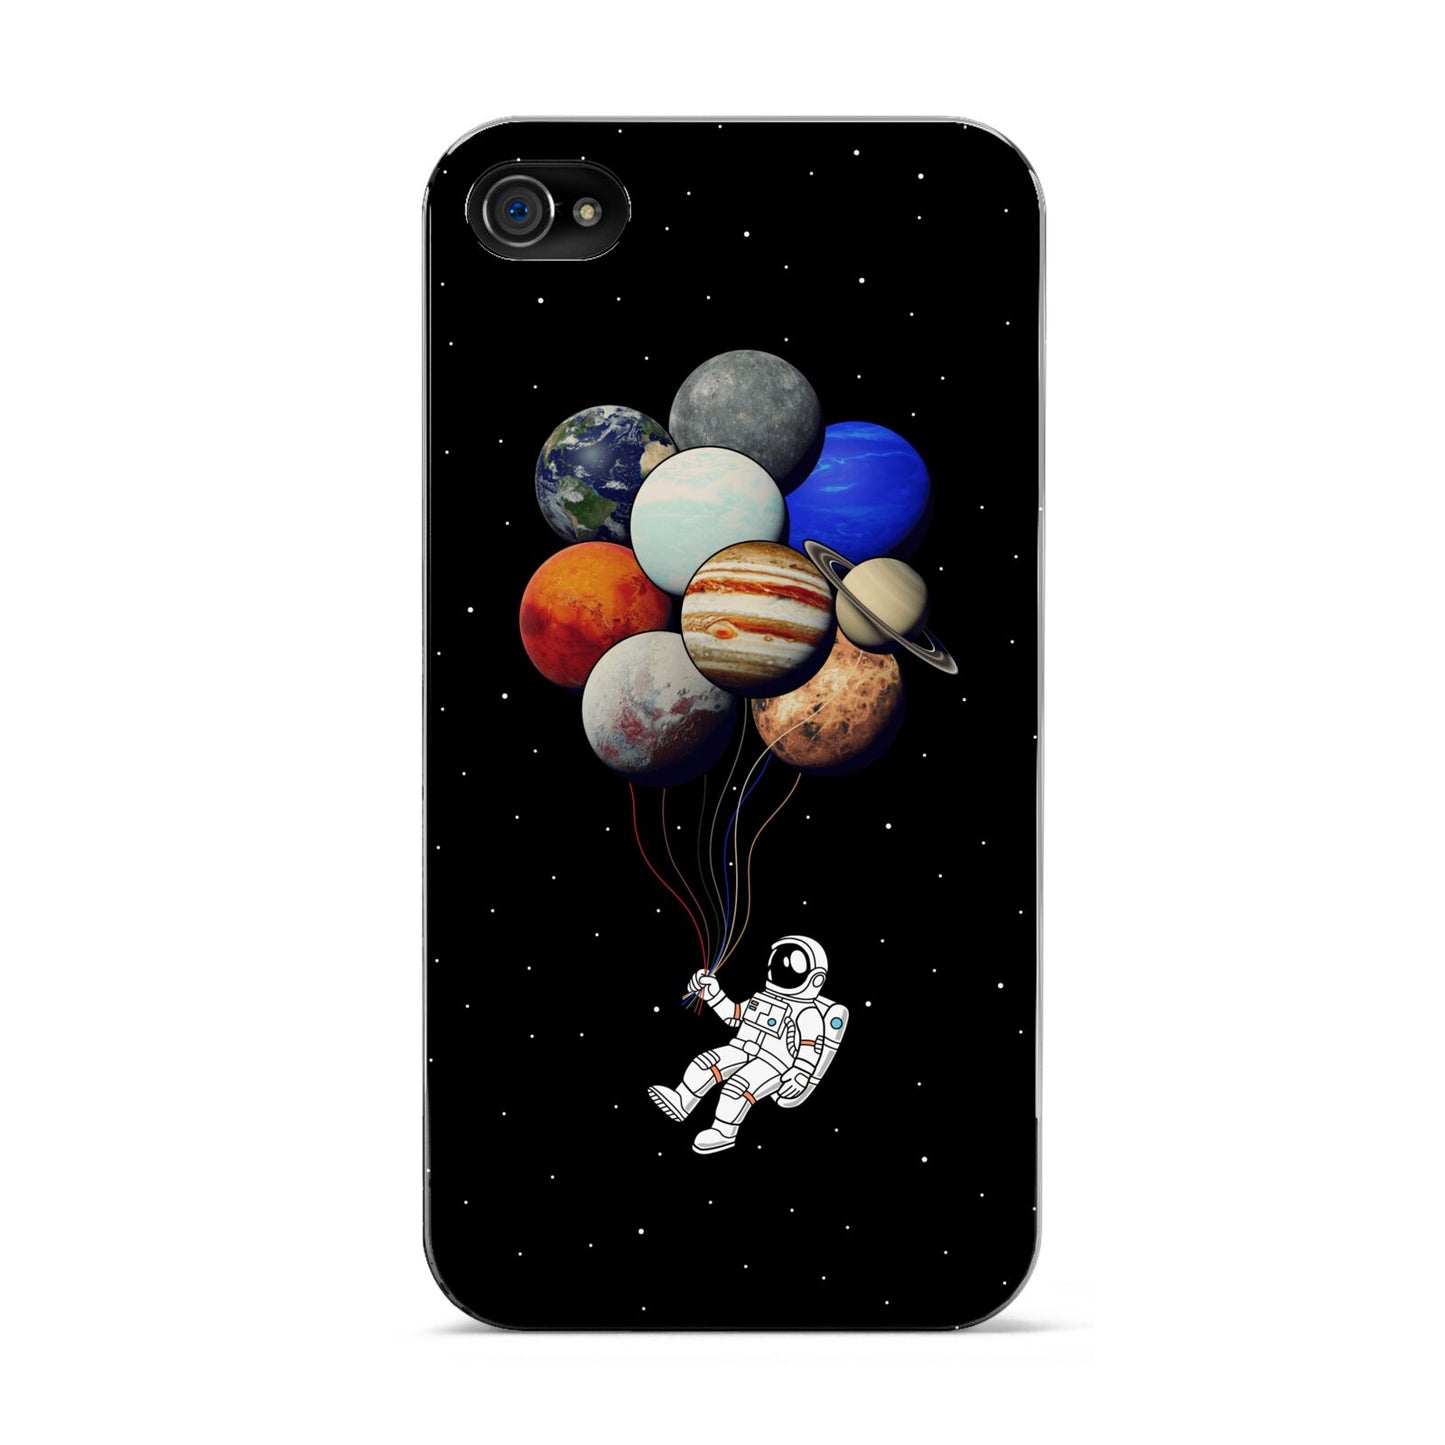 Astronaut Planet Balloons Apple iPhone 4s Case